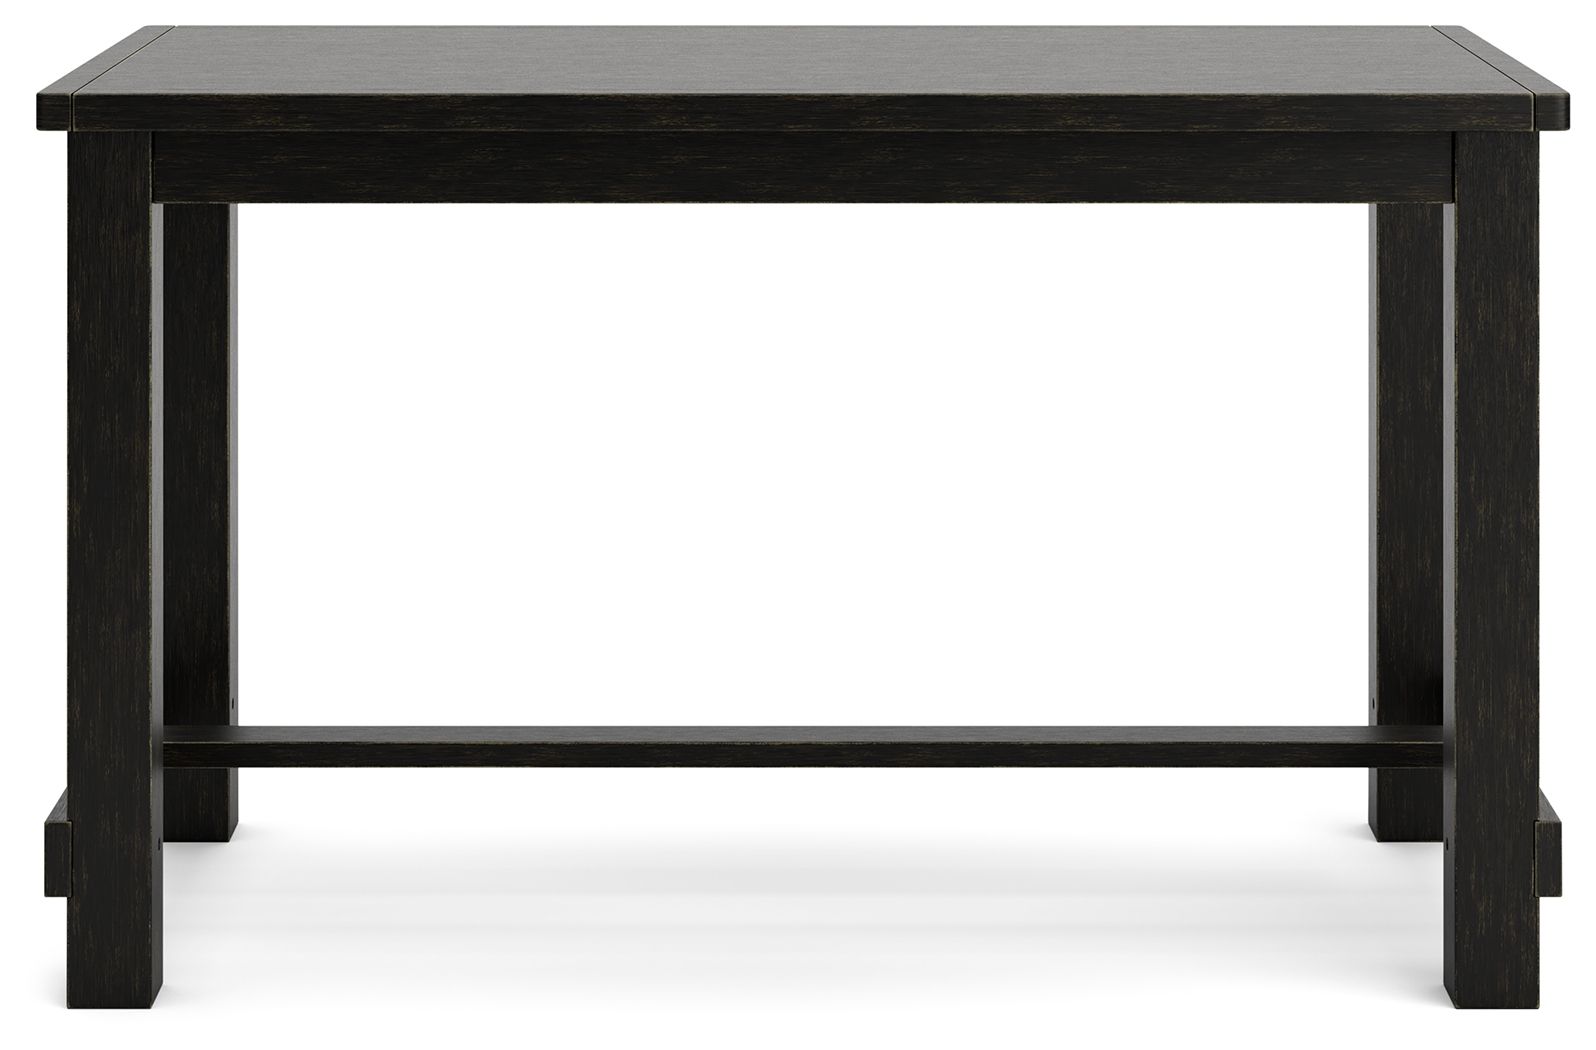 Jeanette - Black / Gray - 5 Pc. - Counter Table, 4 Upholstered Barstools